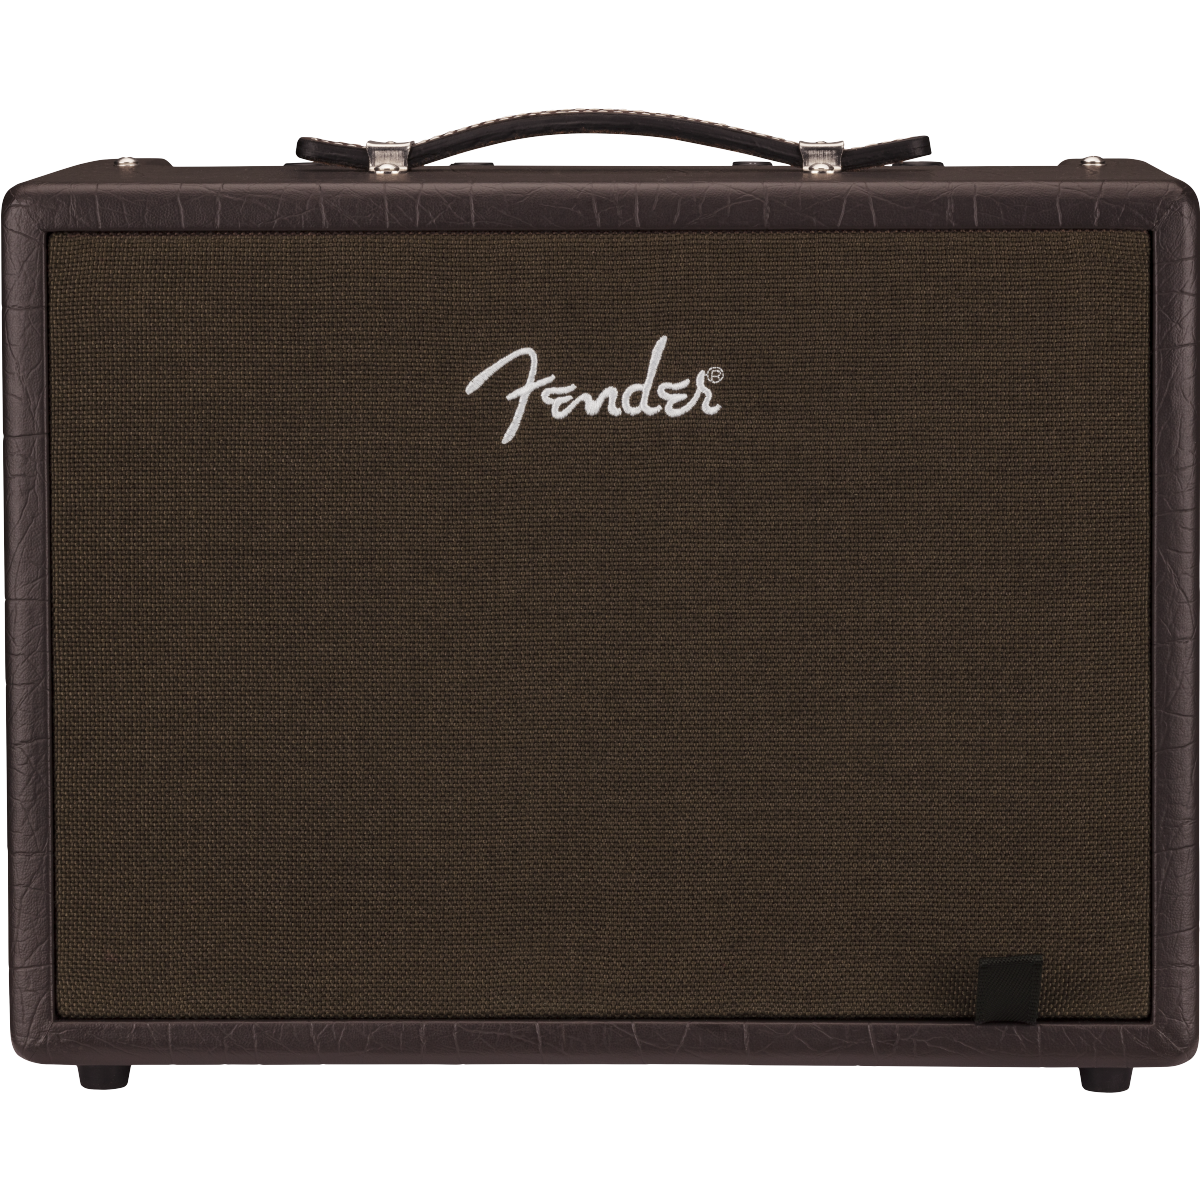 Fender 231-4300-000 Acoustic Junior Amplifier